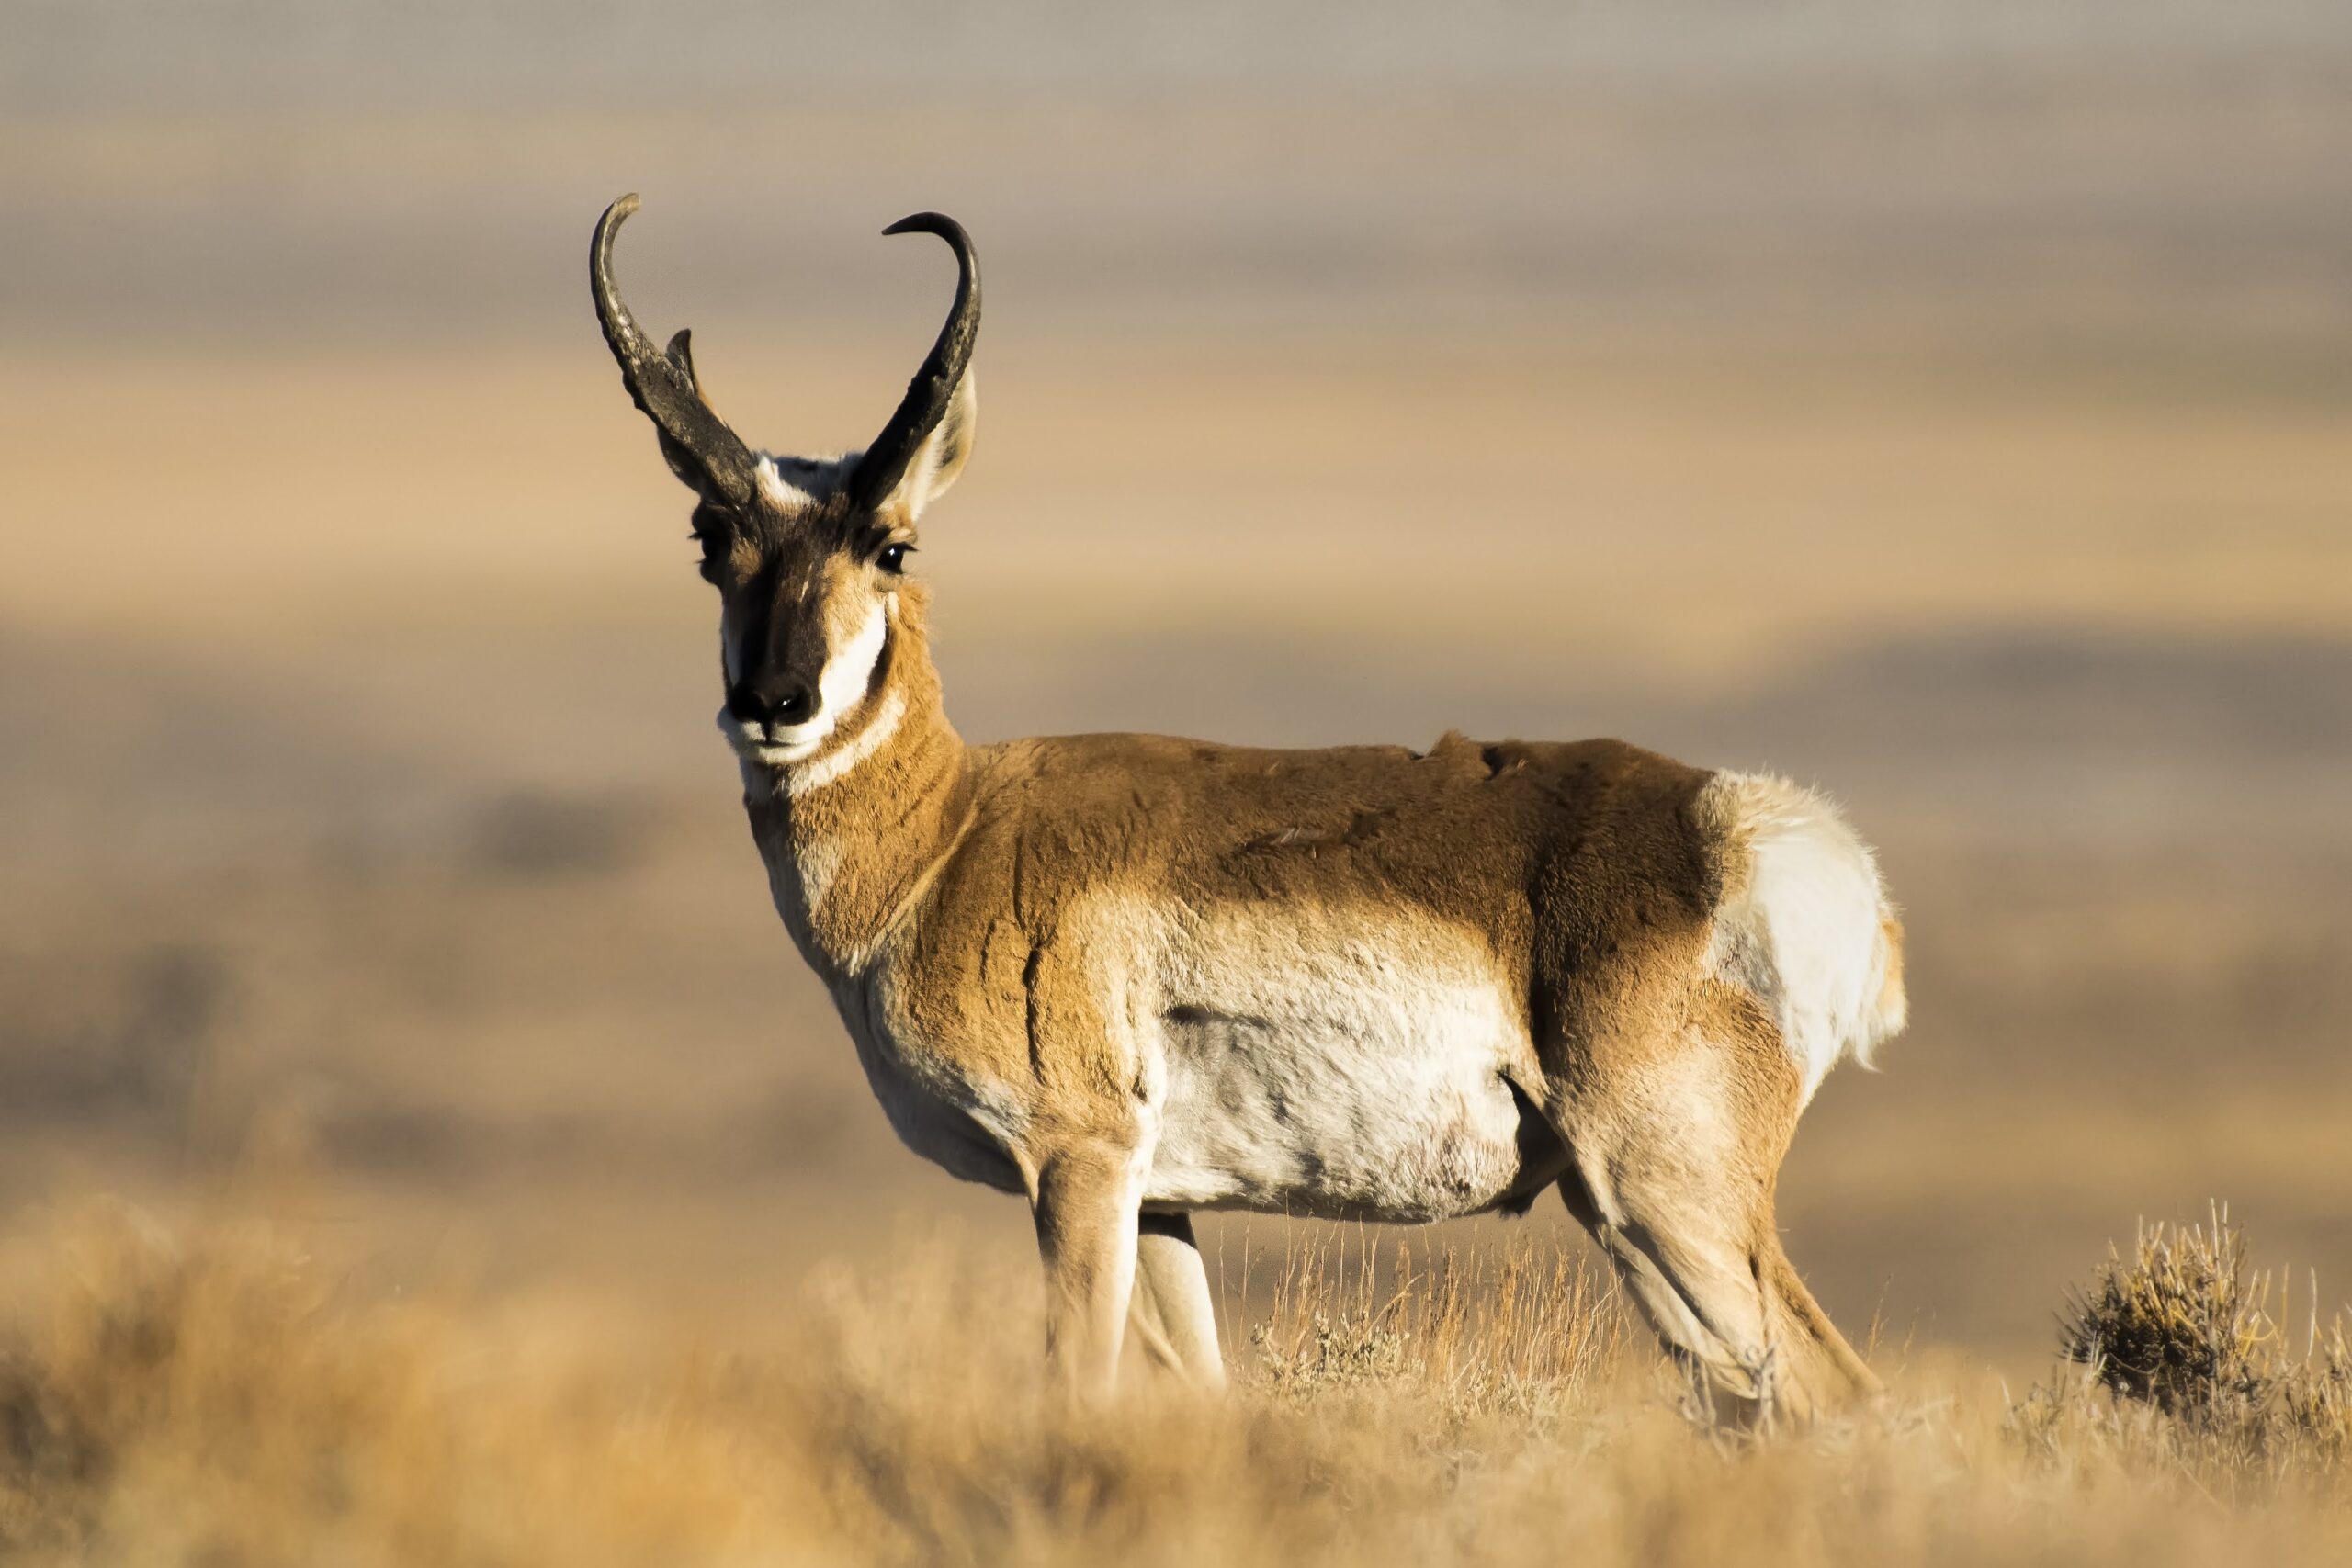 West desert pronghorn antelope buck.